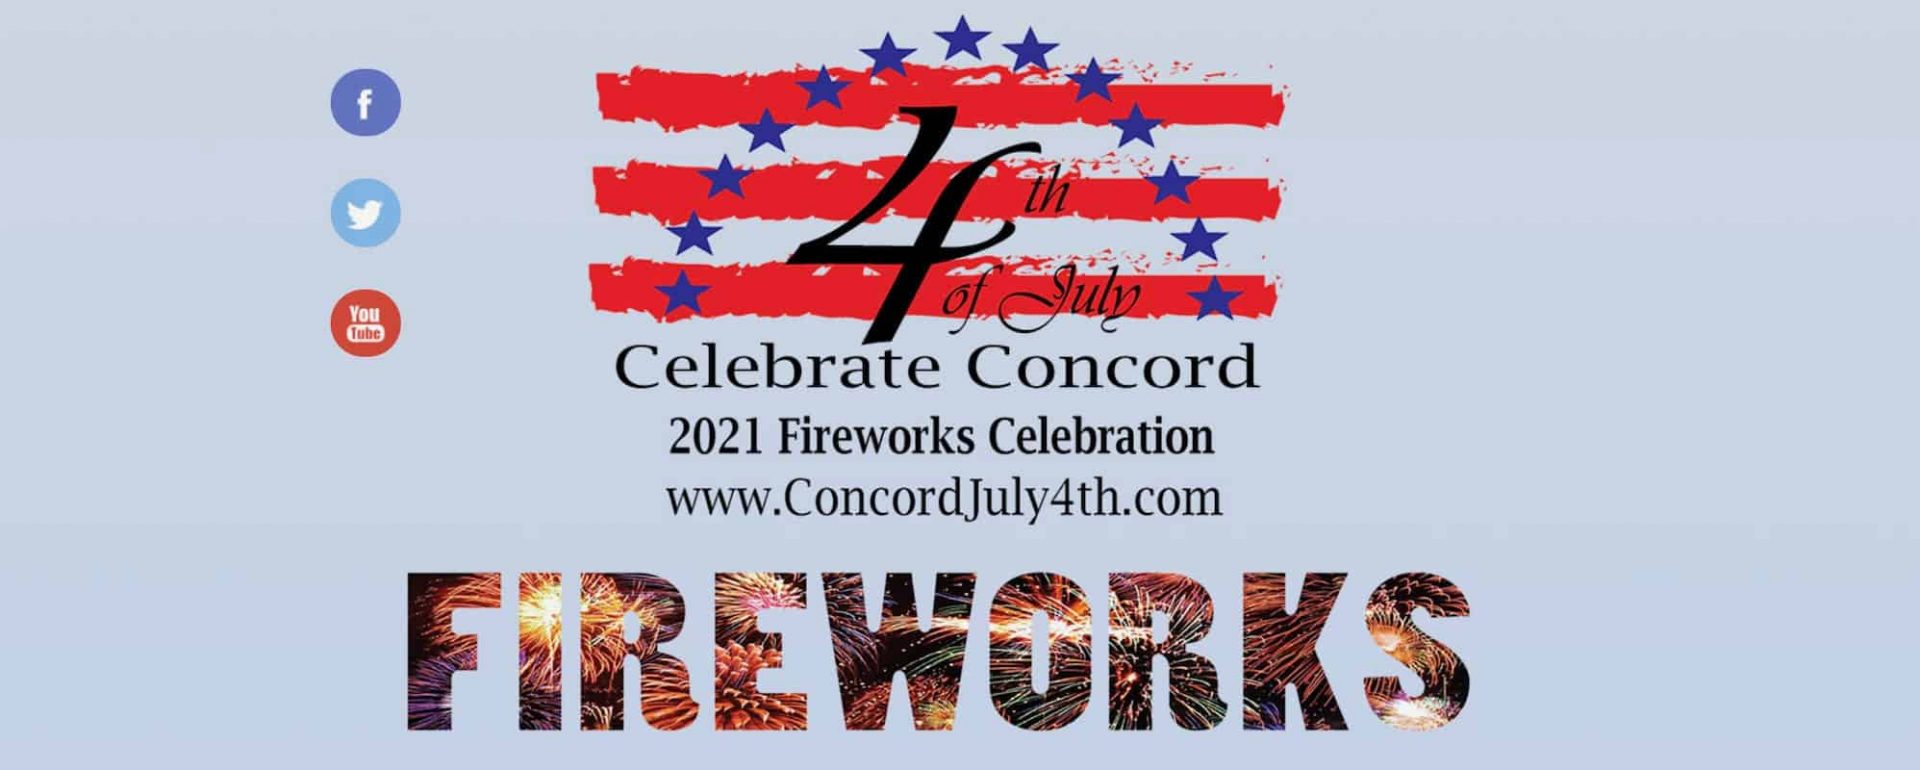 Concord Fireworks Celebration